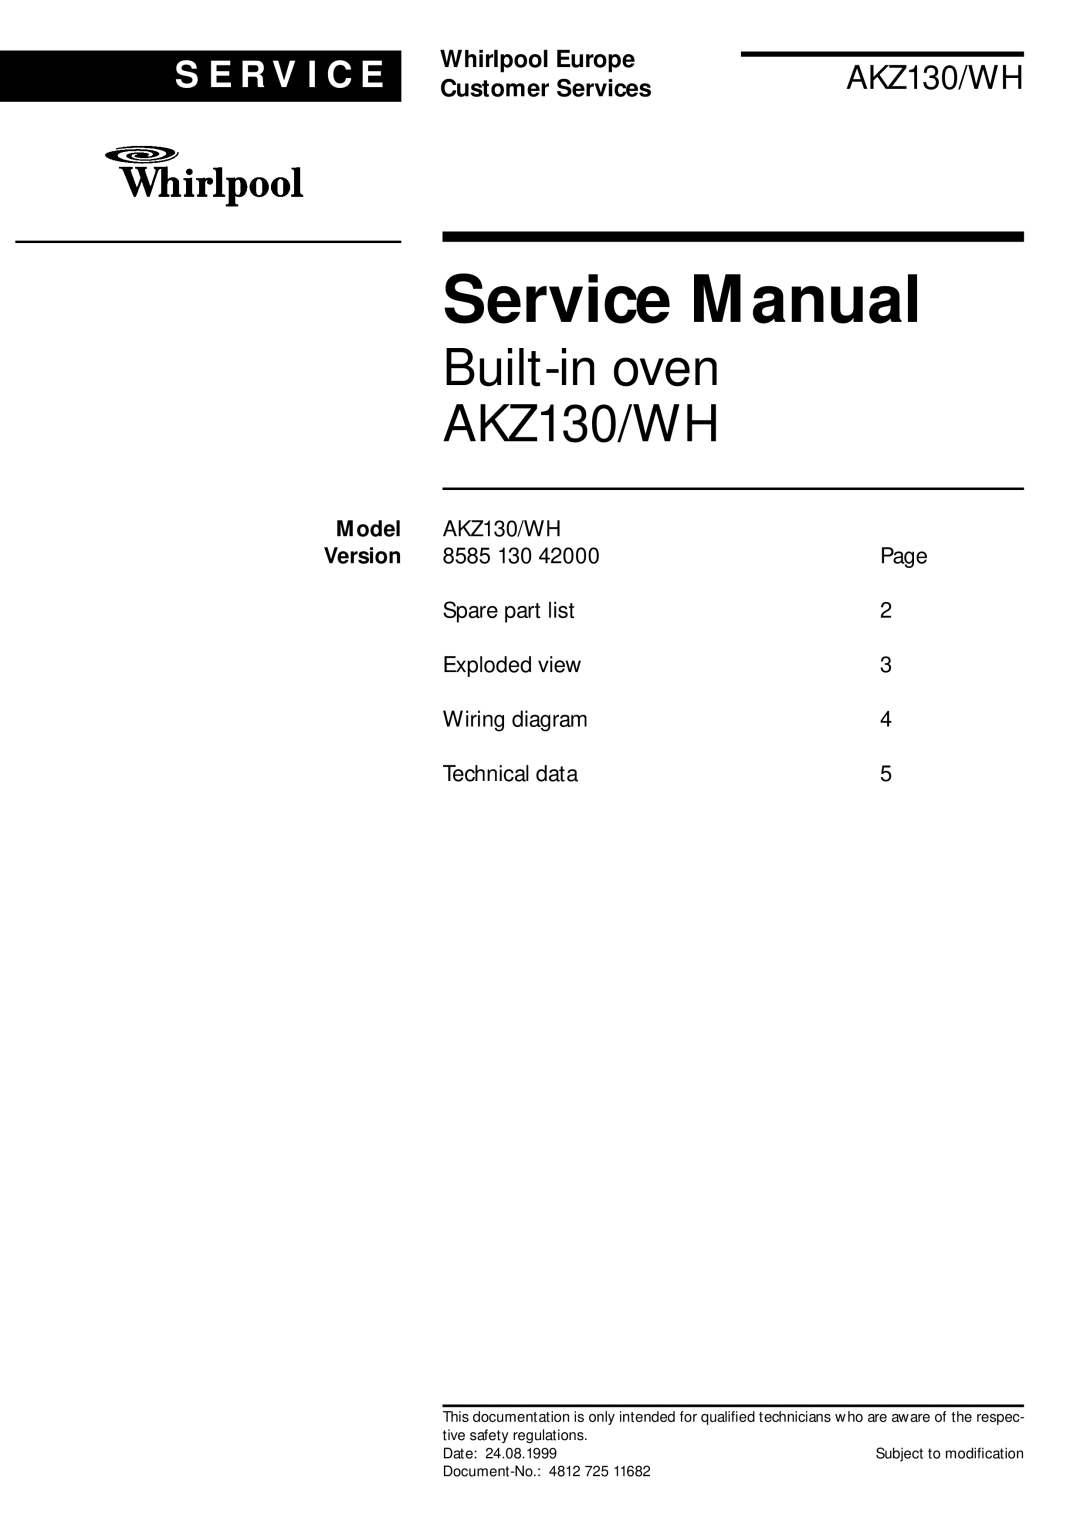 Whirlpool service manual Model, Cooker ACM 388 WH, S E R V I C E, Whirlpool Europe, Customer Services 